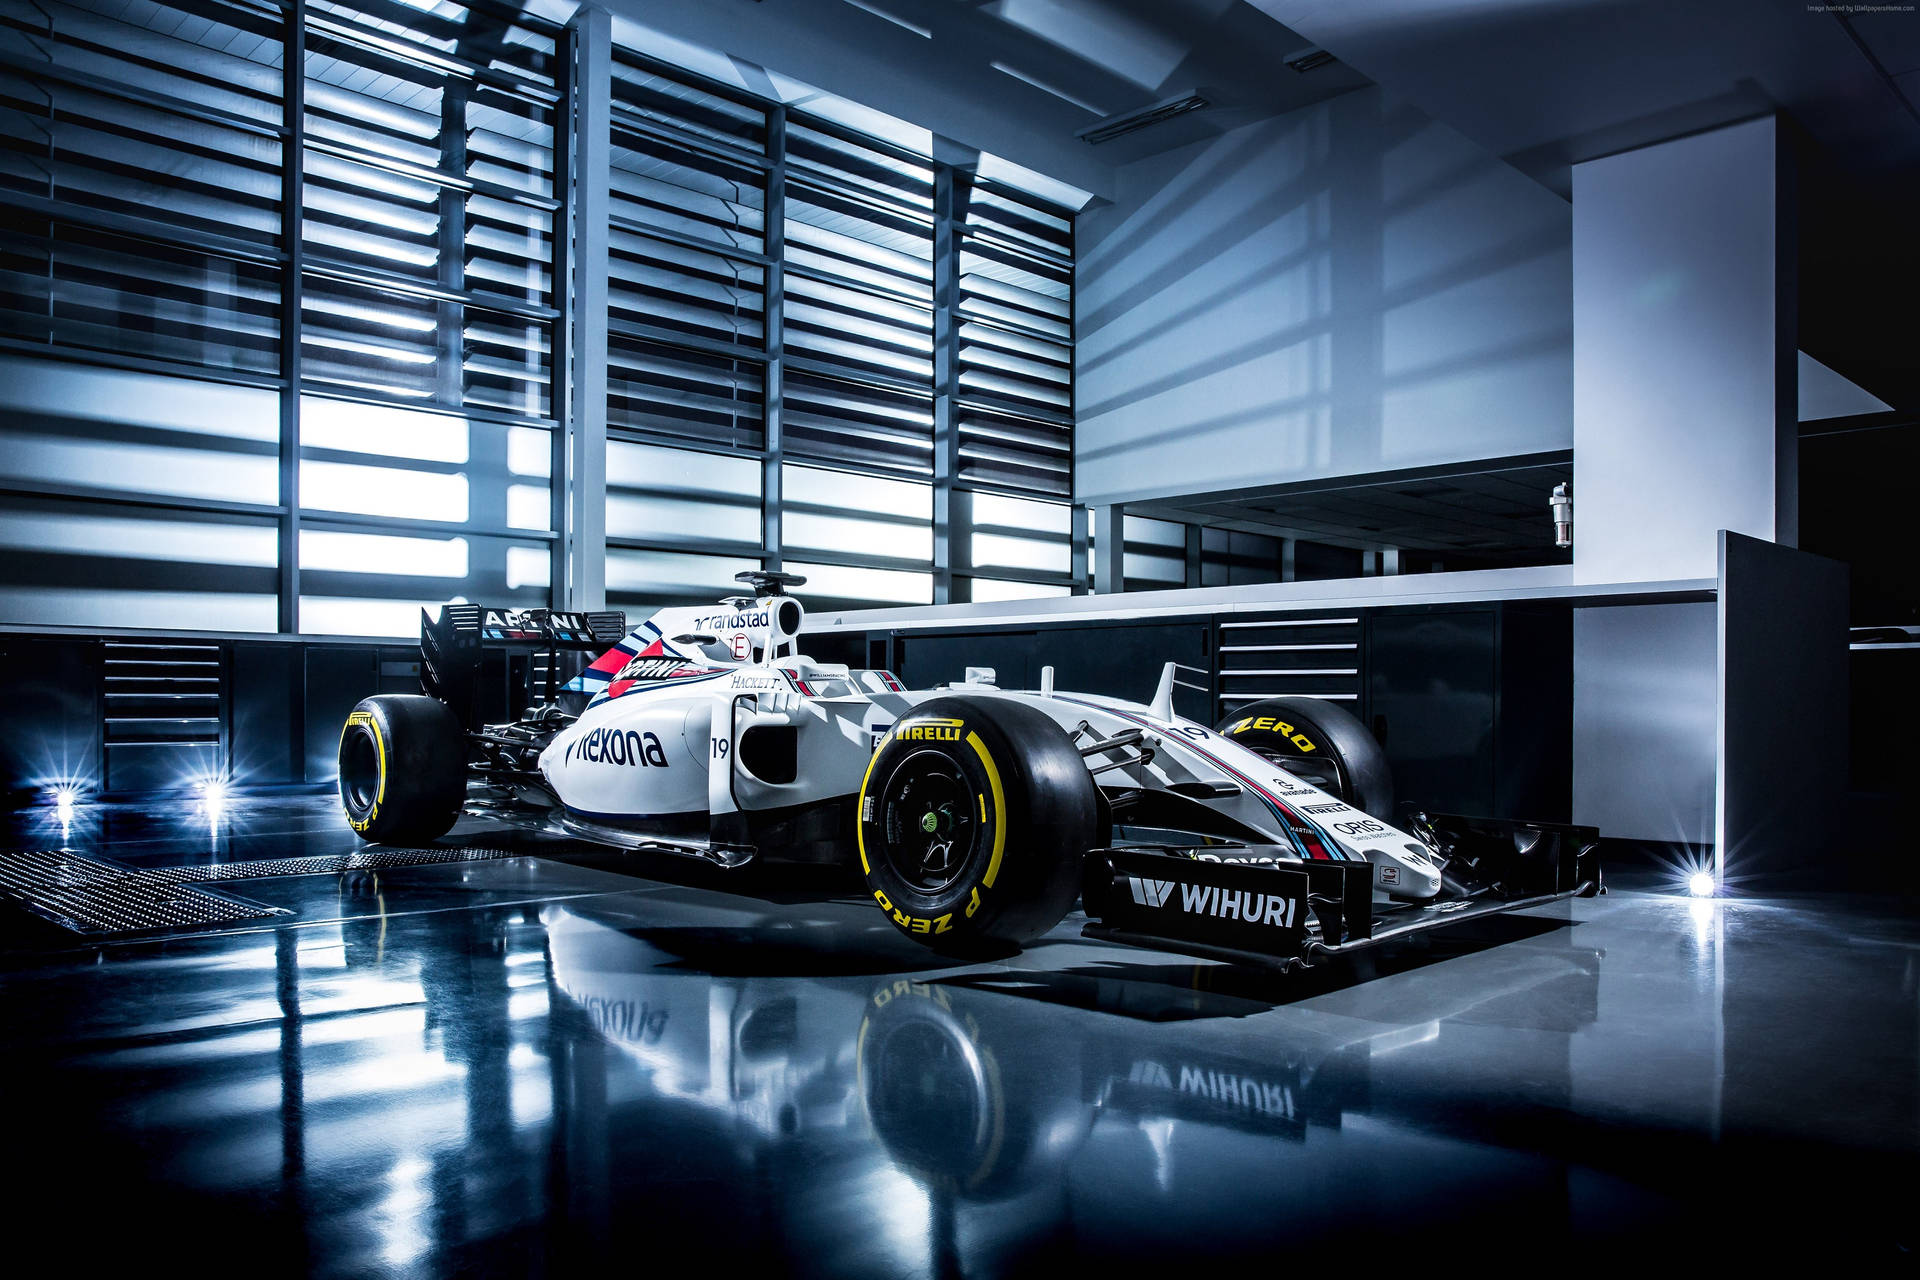 Williams Car In Large Garage Wallpaper